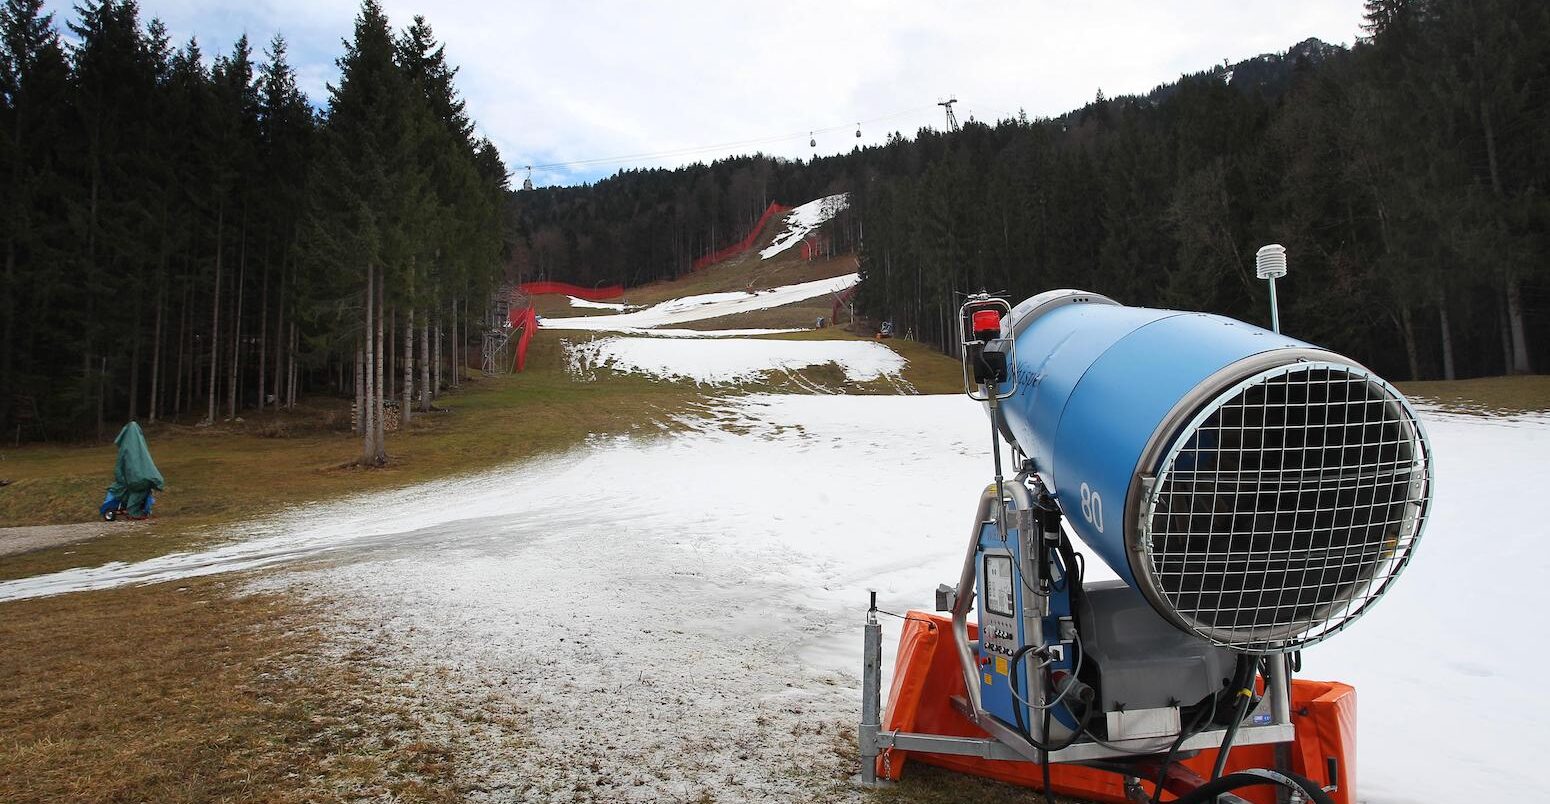 A snow gun stands on the periphery of the Kandahar ski slope in Garmisch-Partenkirchen, Germany.